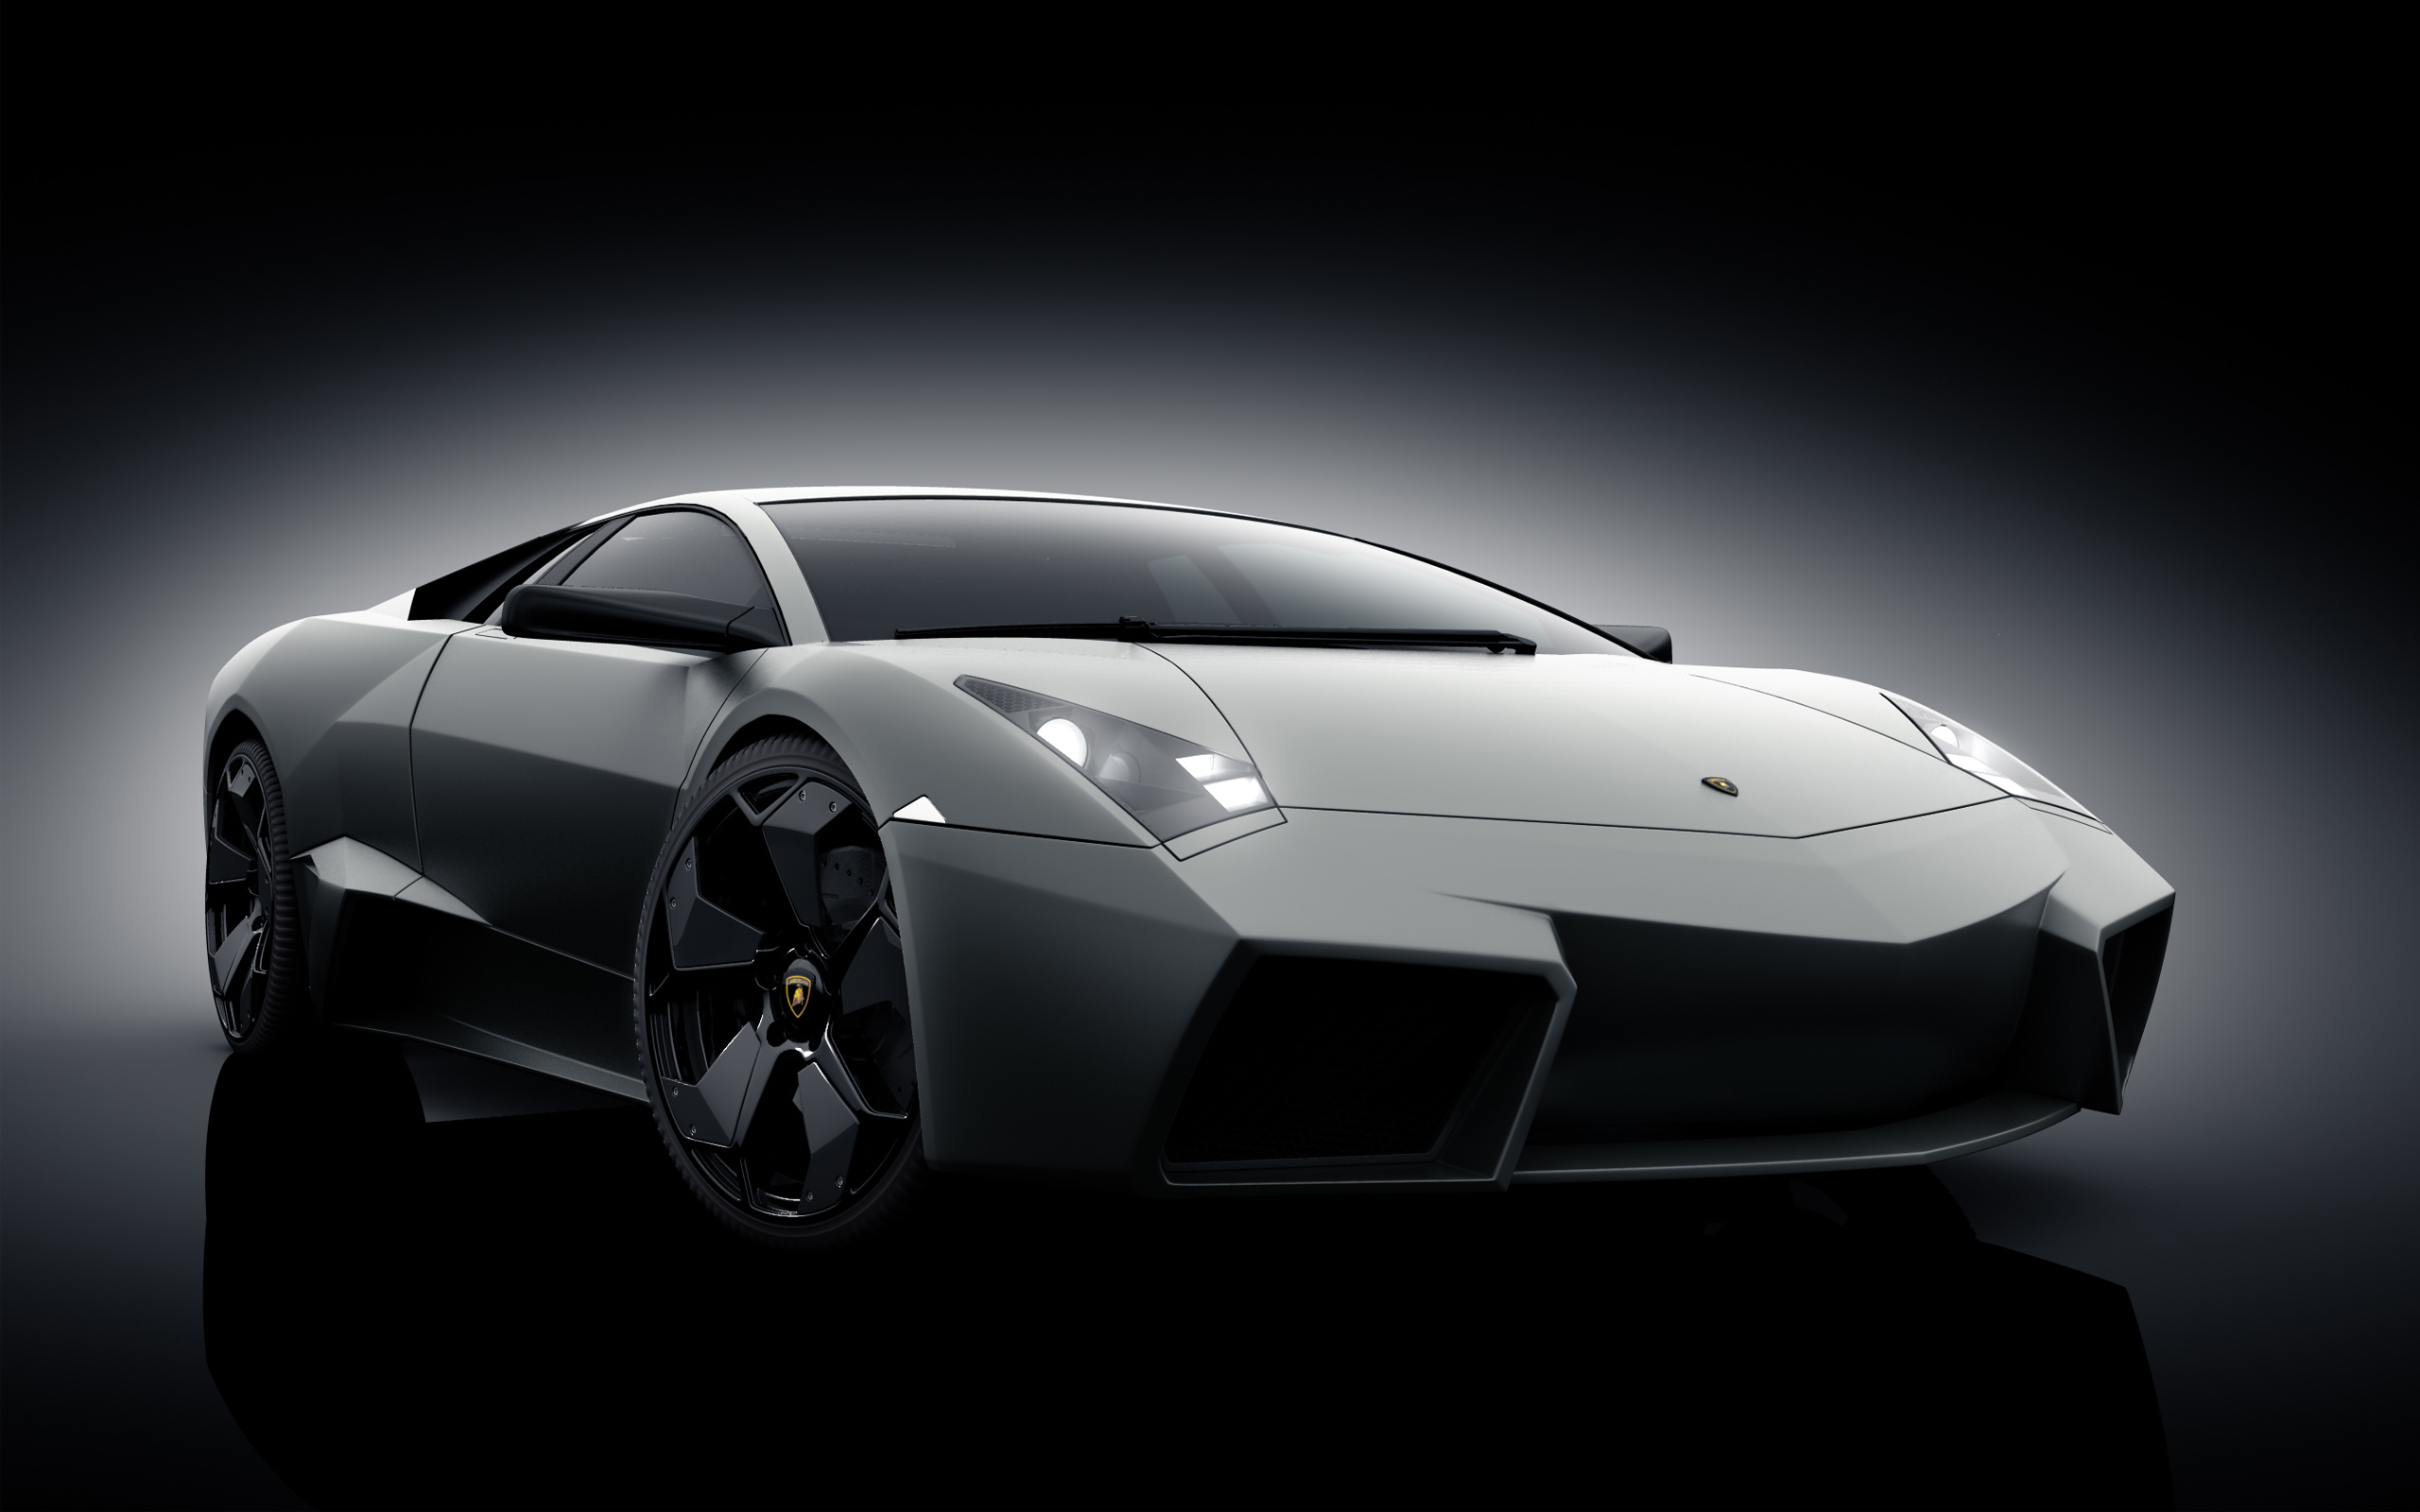 The Lamborghini Reventon Concept Wallpaper | HD Car Wallpapers | ID #4828